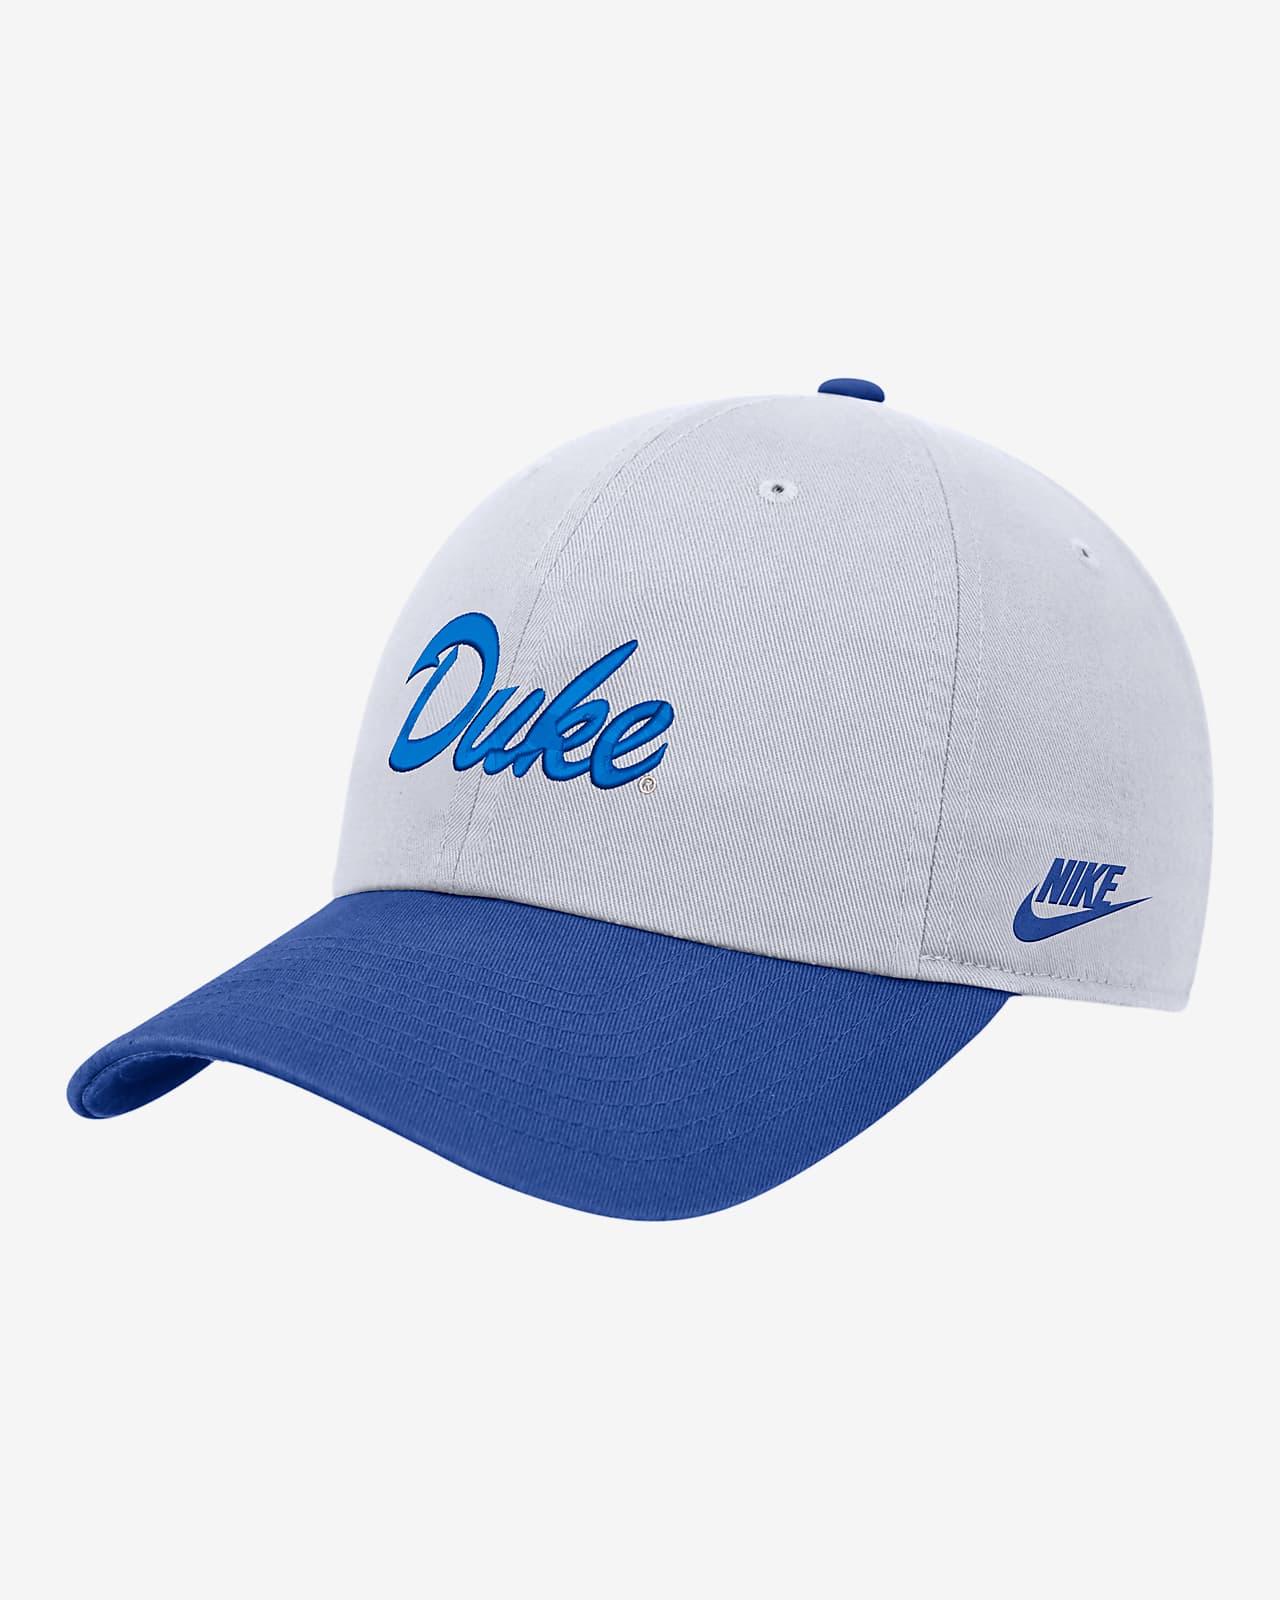 Duke Nike College Campus Cap